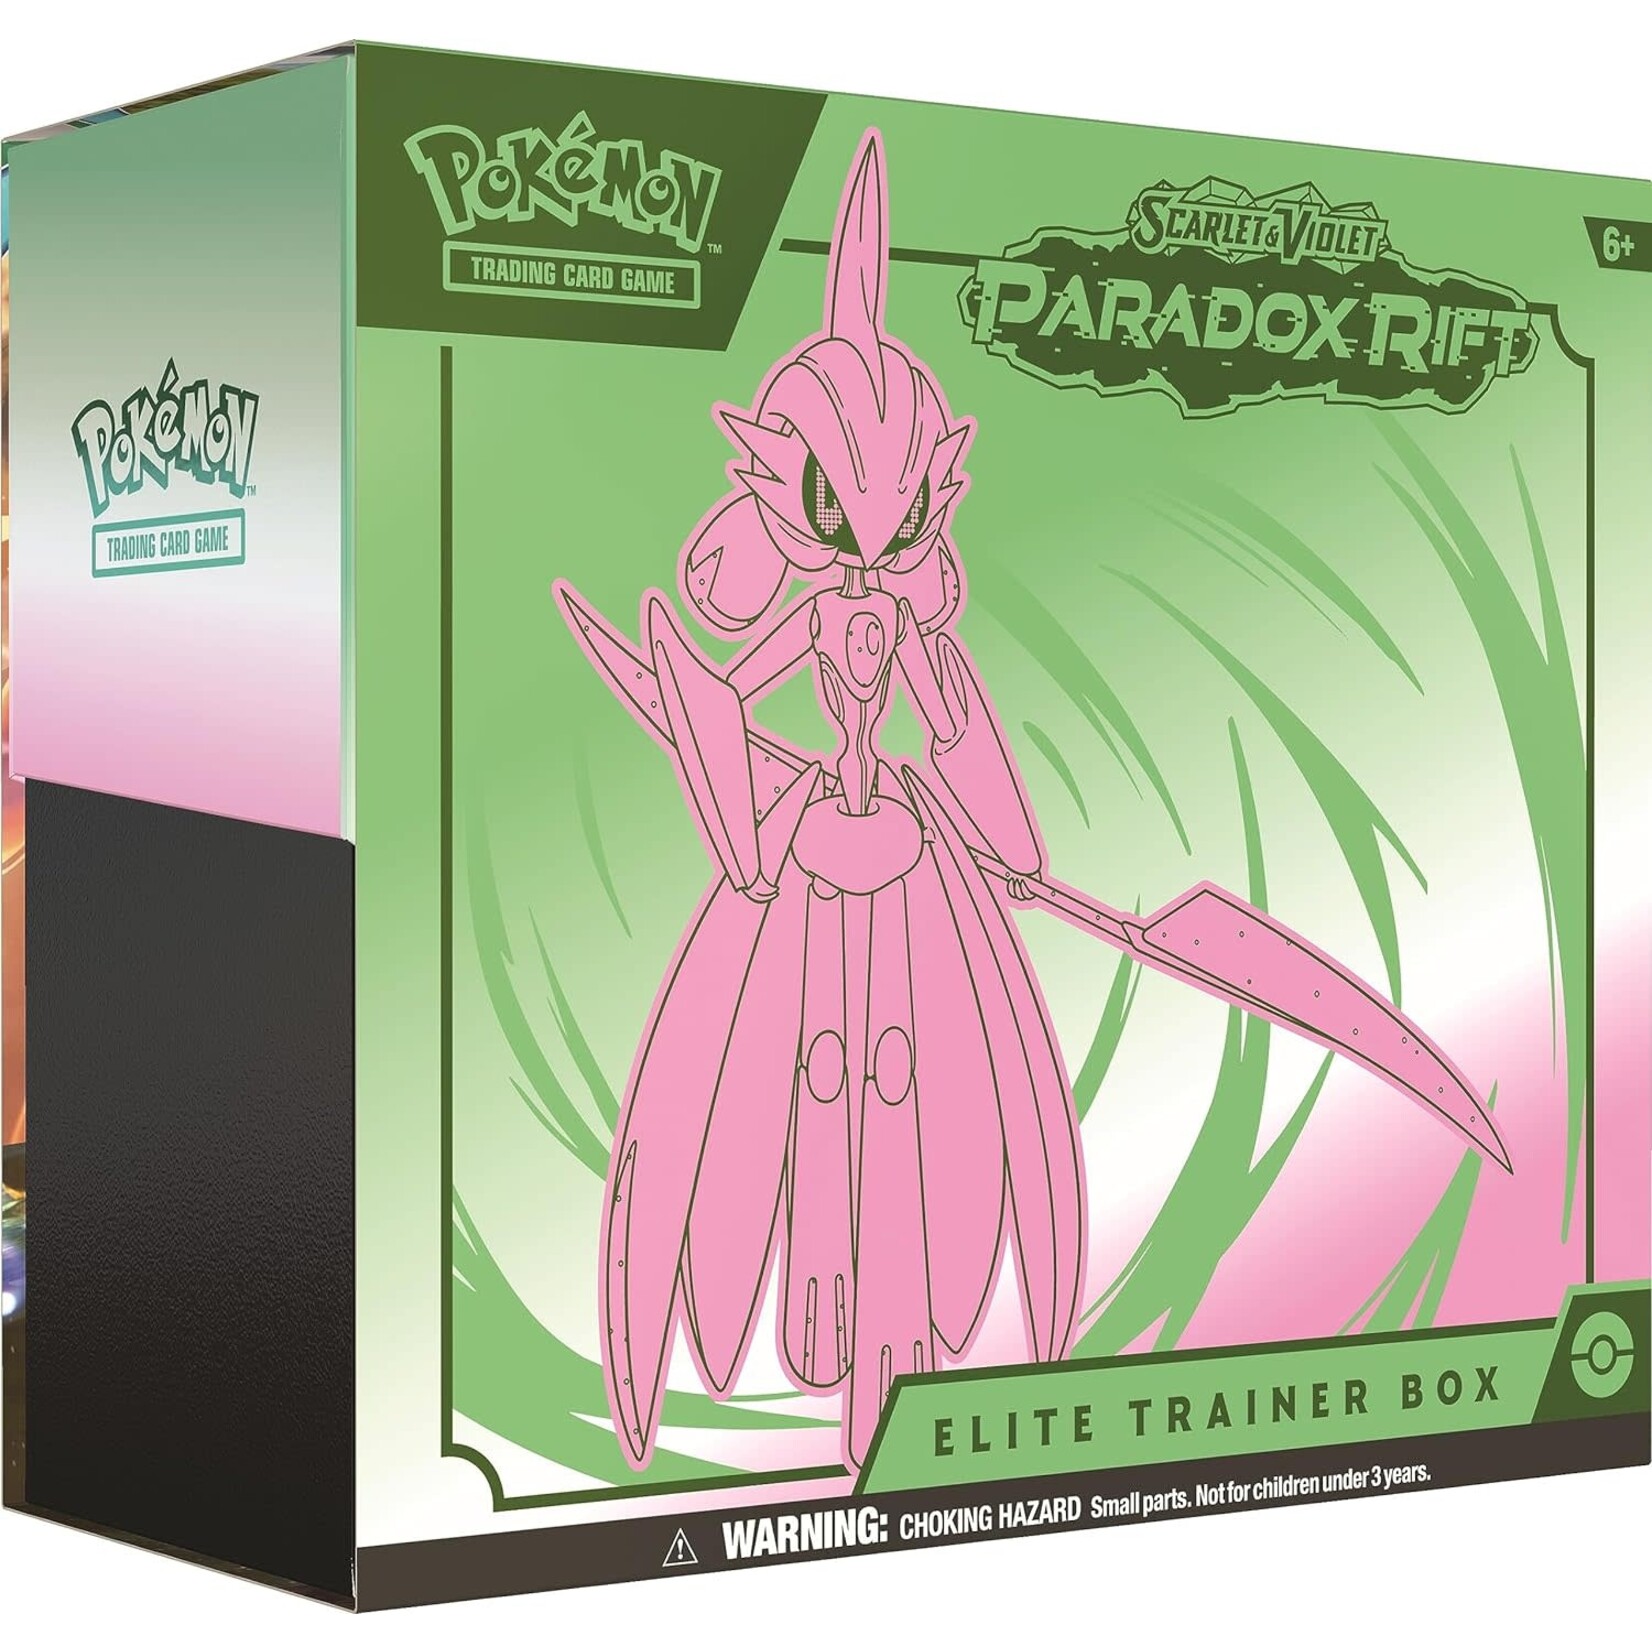 Pokemon TCG: Scarlet & Violet 04 Paradox Rift Elite Trainer Box